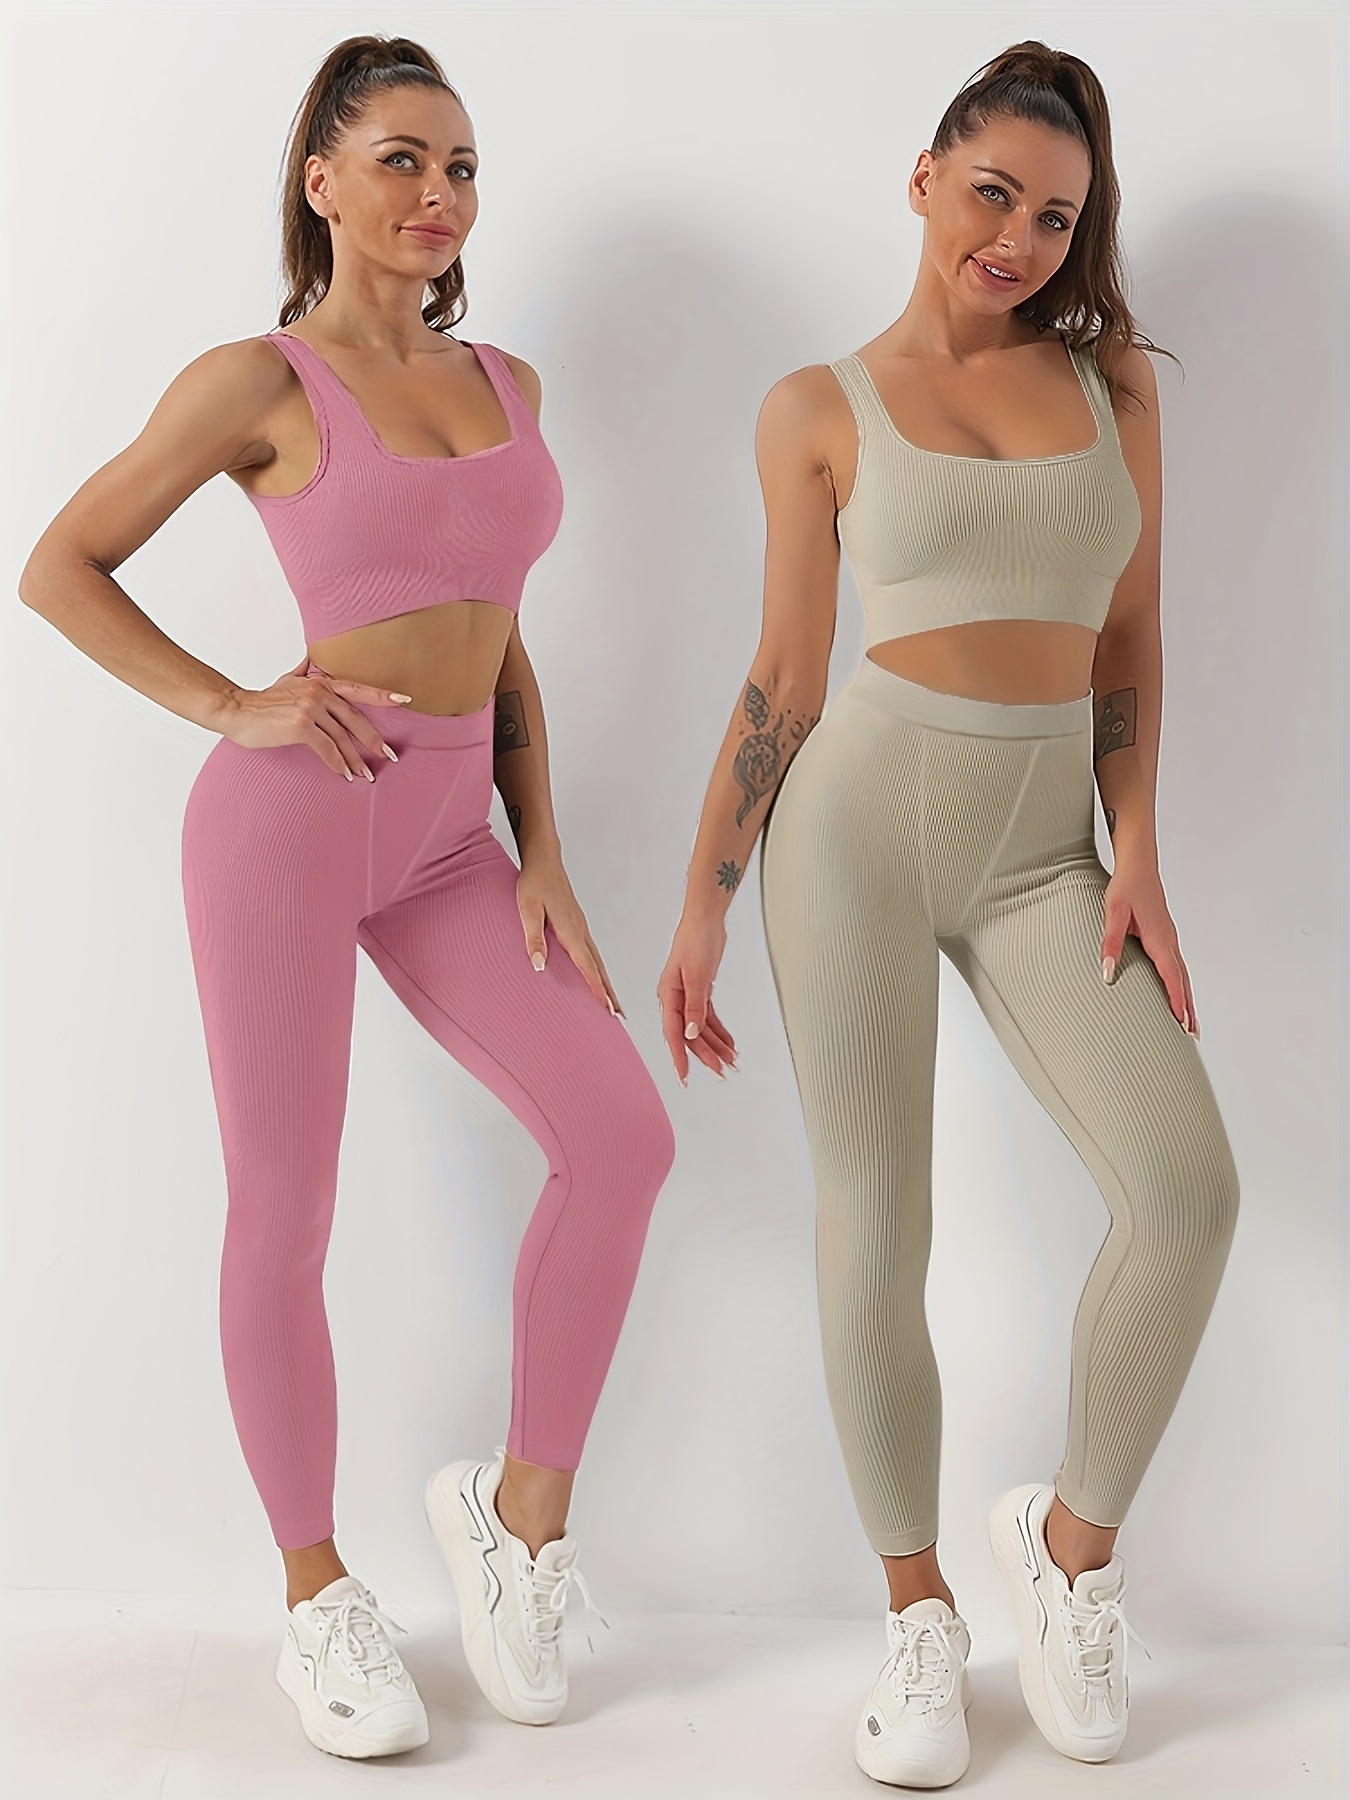 harmtty Sexy Women Push Up Seamless Shockproof Sports Bra Stretch Workout  Yoga Tank Top,Pink,M